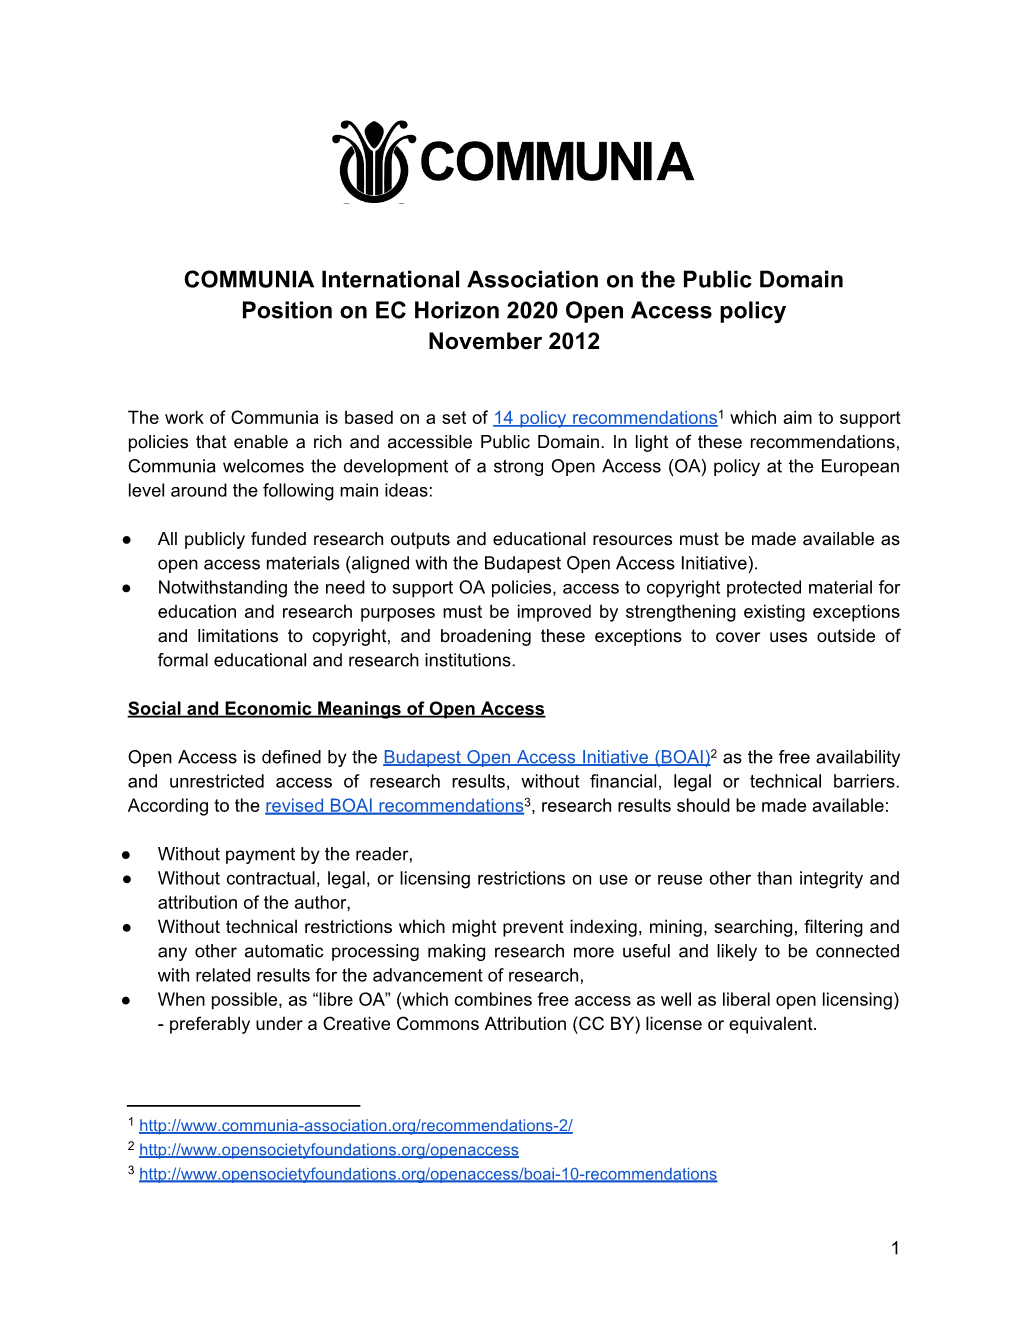 COMMUNIA International Association on the Public Domain Position on EC Horizon 2020 Open Access Policy November 2012